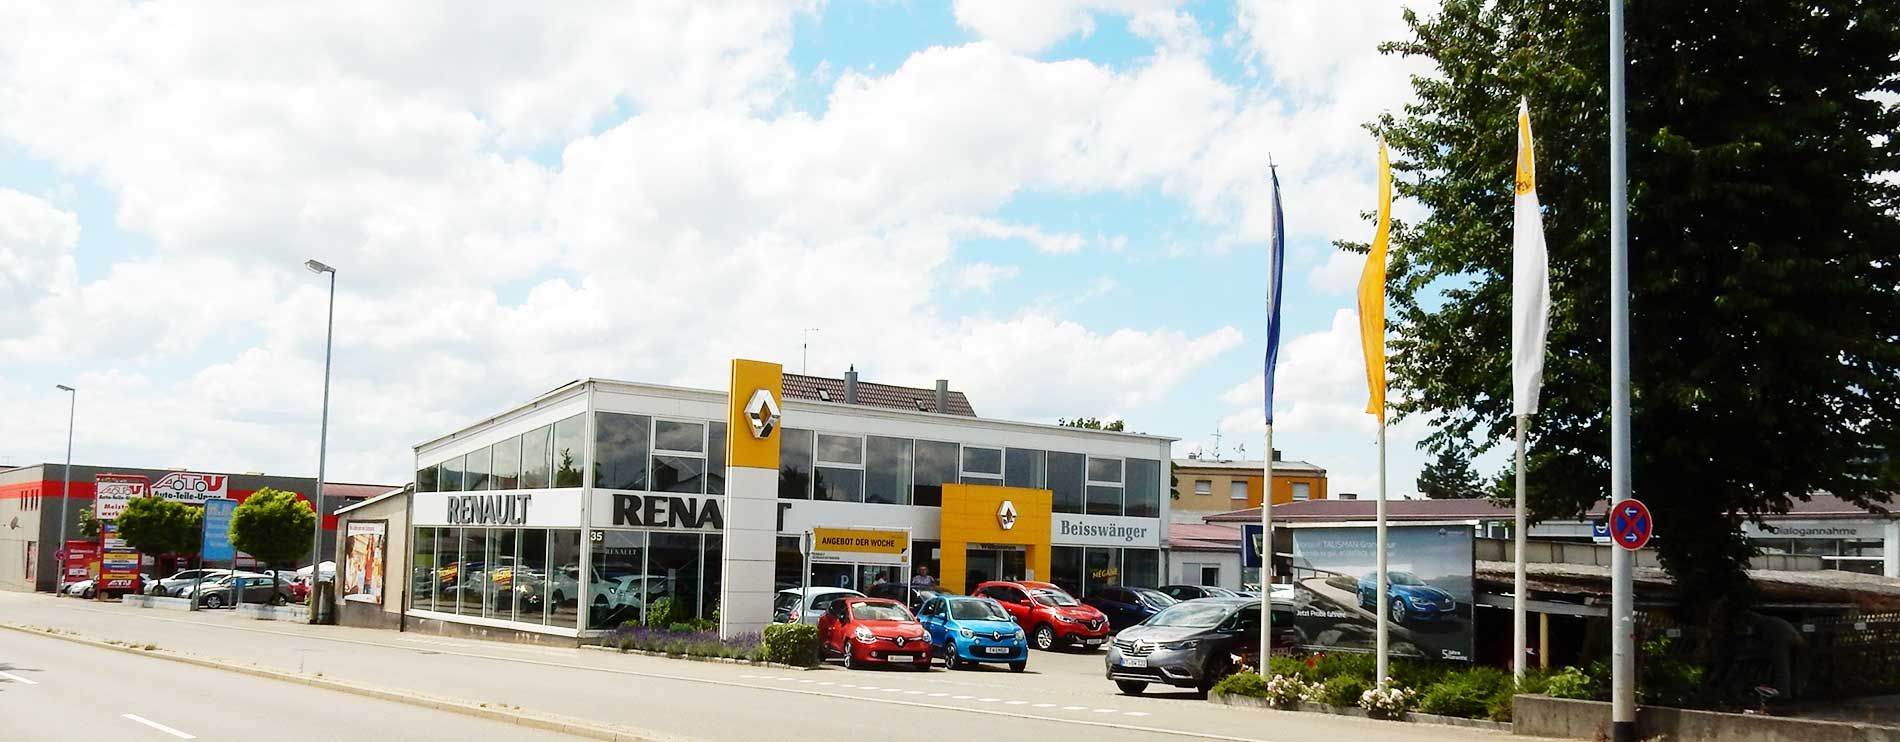 Beisswaenger-Renault-Dacia-Reutlingen-Vertragshaendler